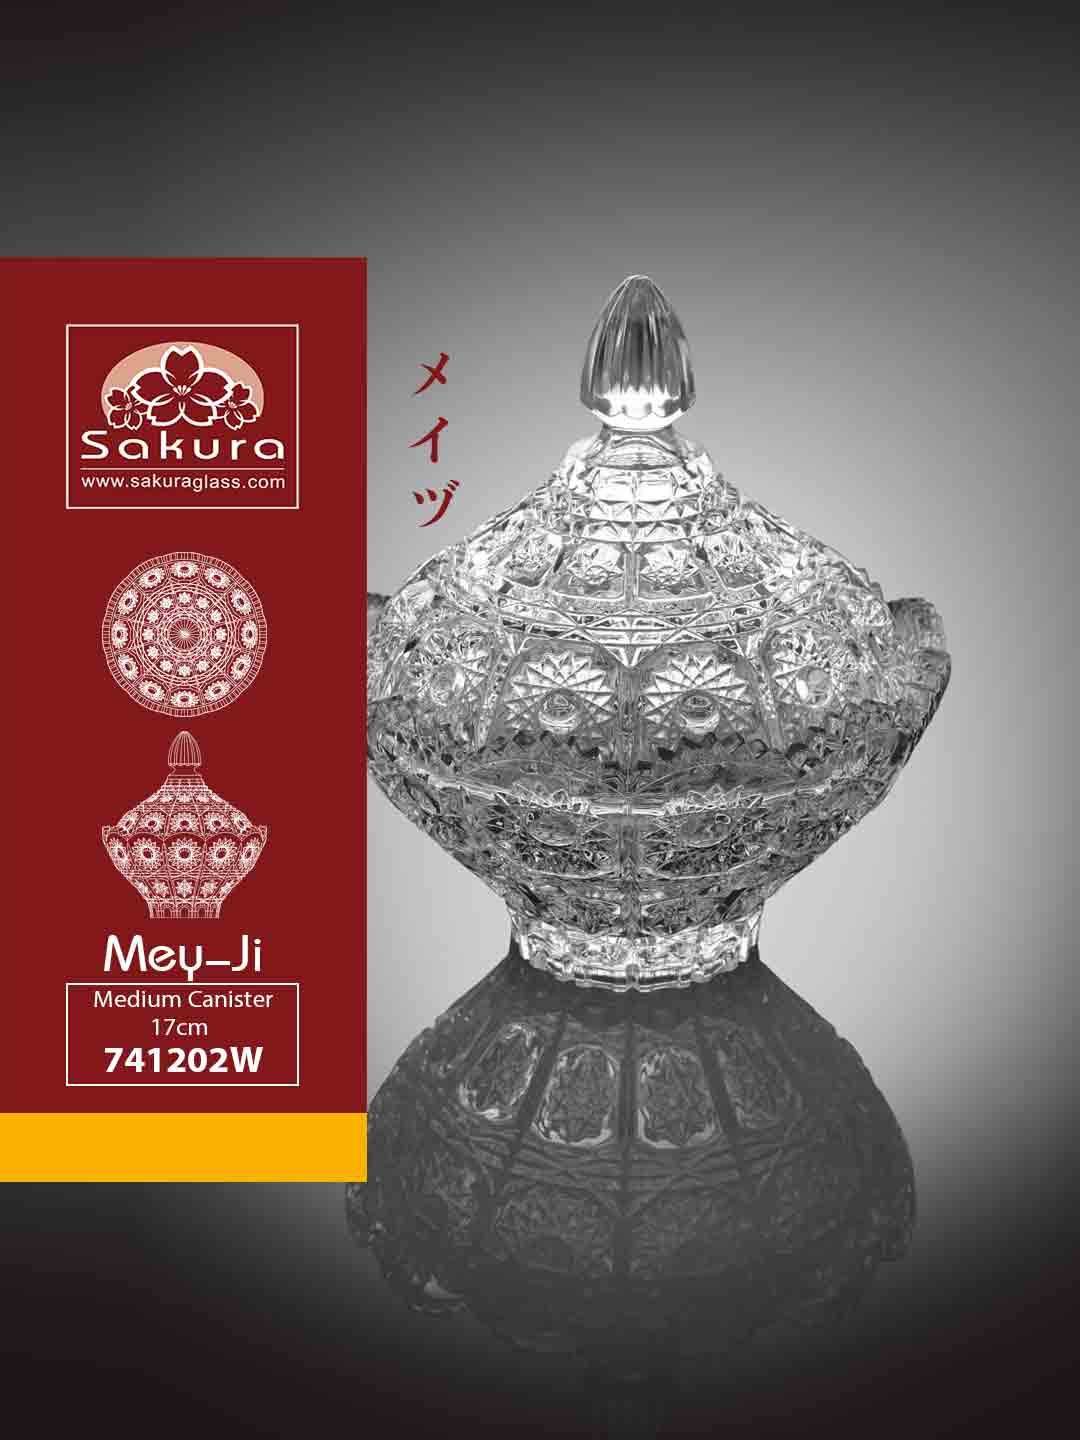 Sakura Product Mey Ji Medium Canister 17cm 741202W